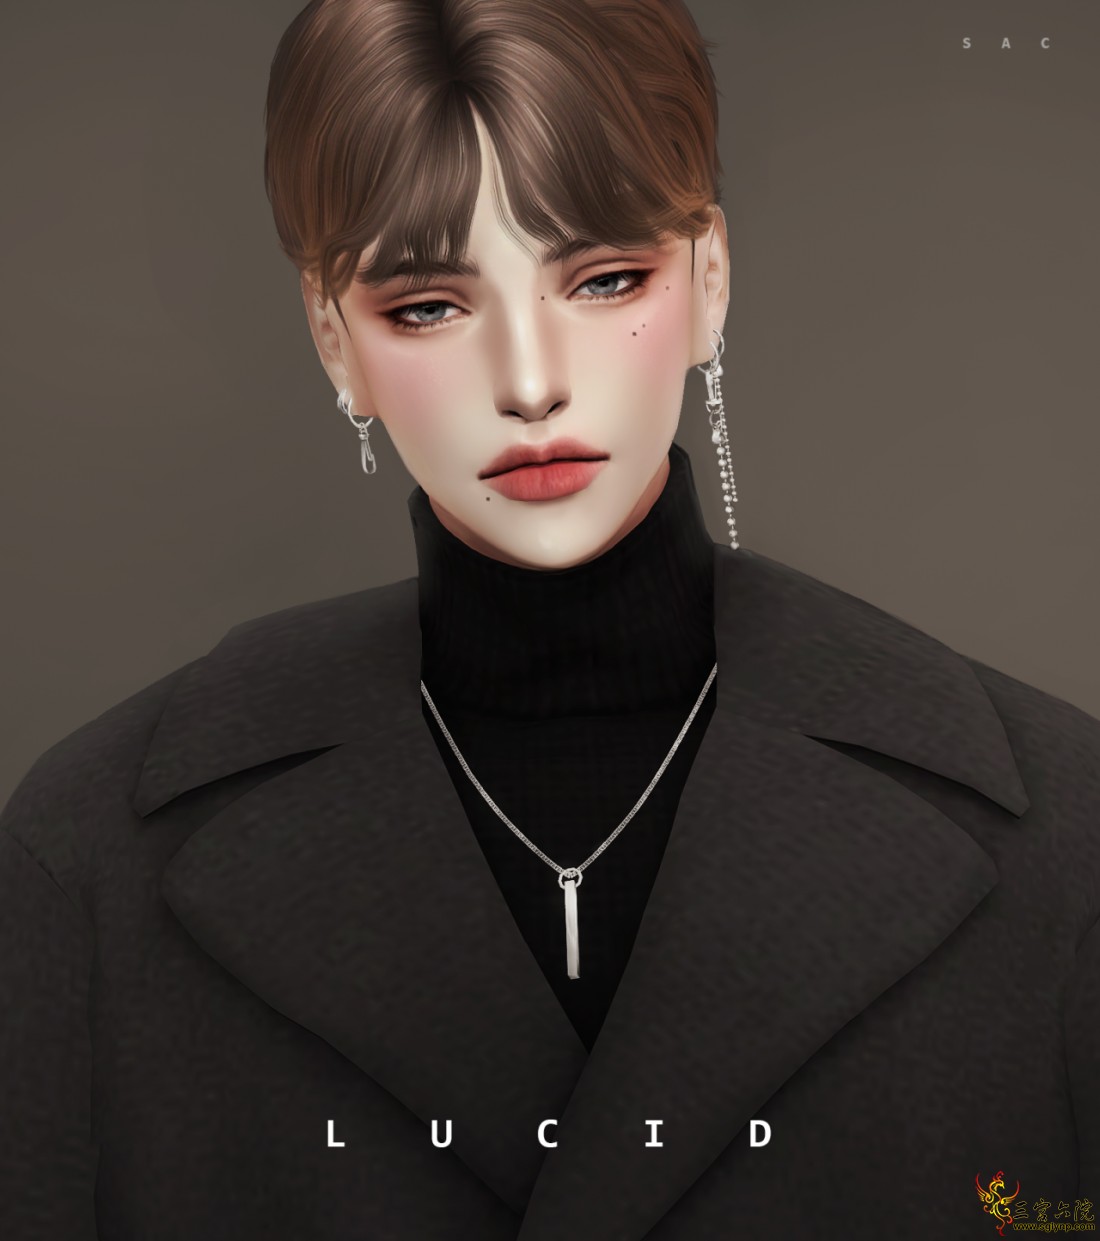 SAC_lucid_piercings + SAC_lucid_necklace.png